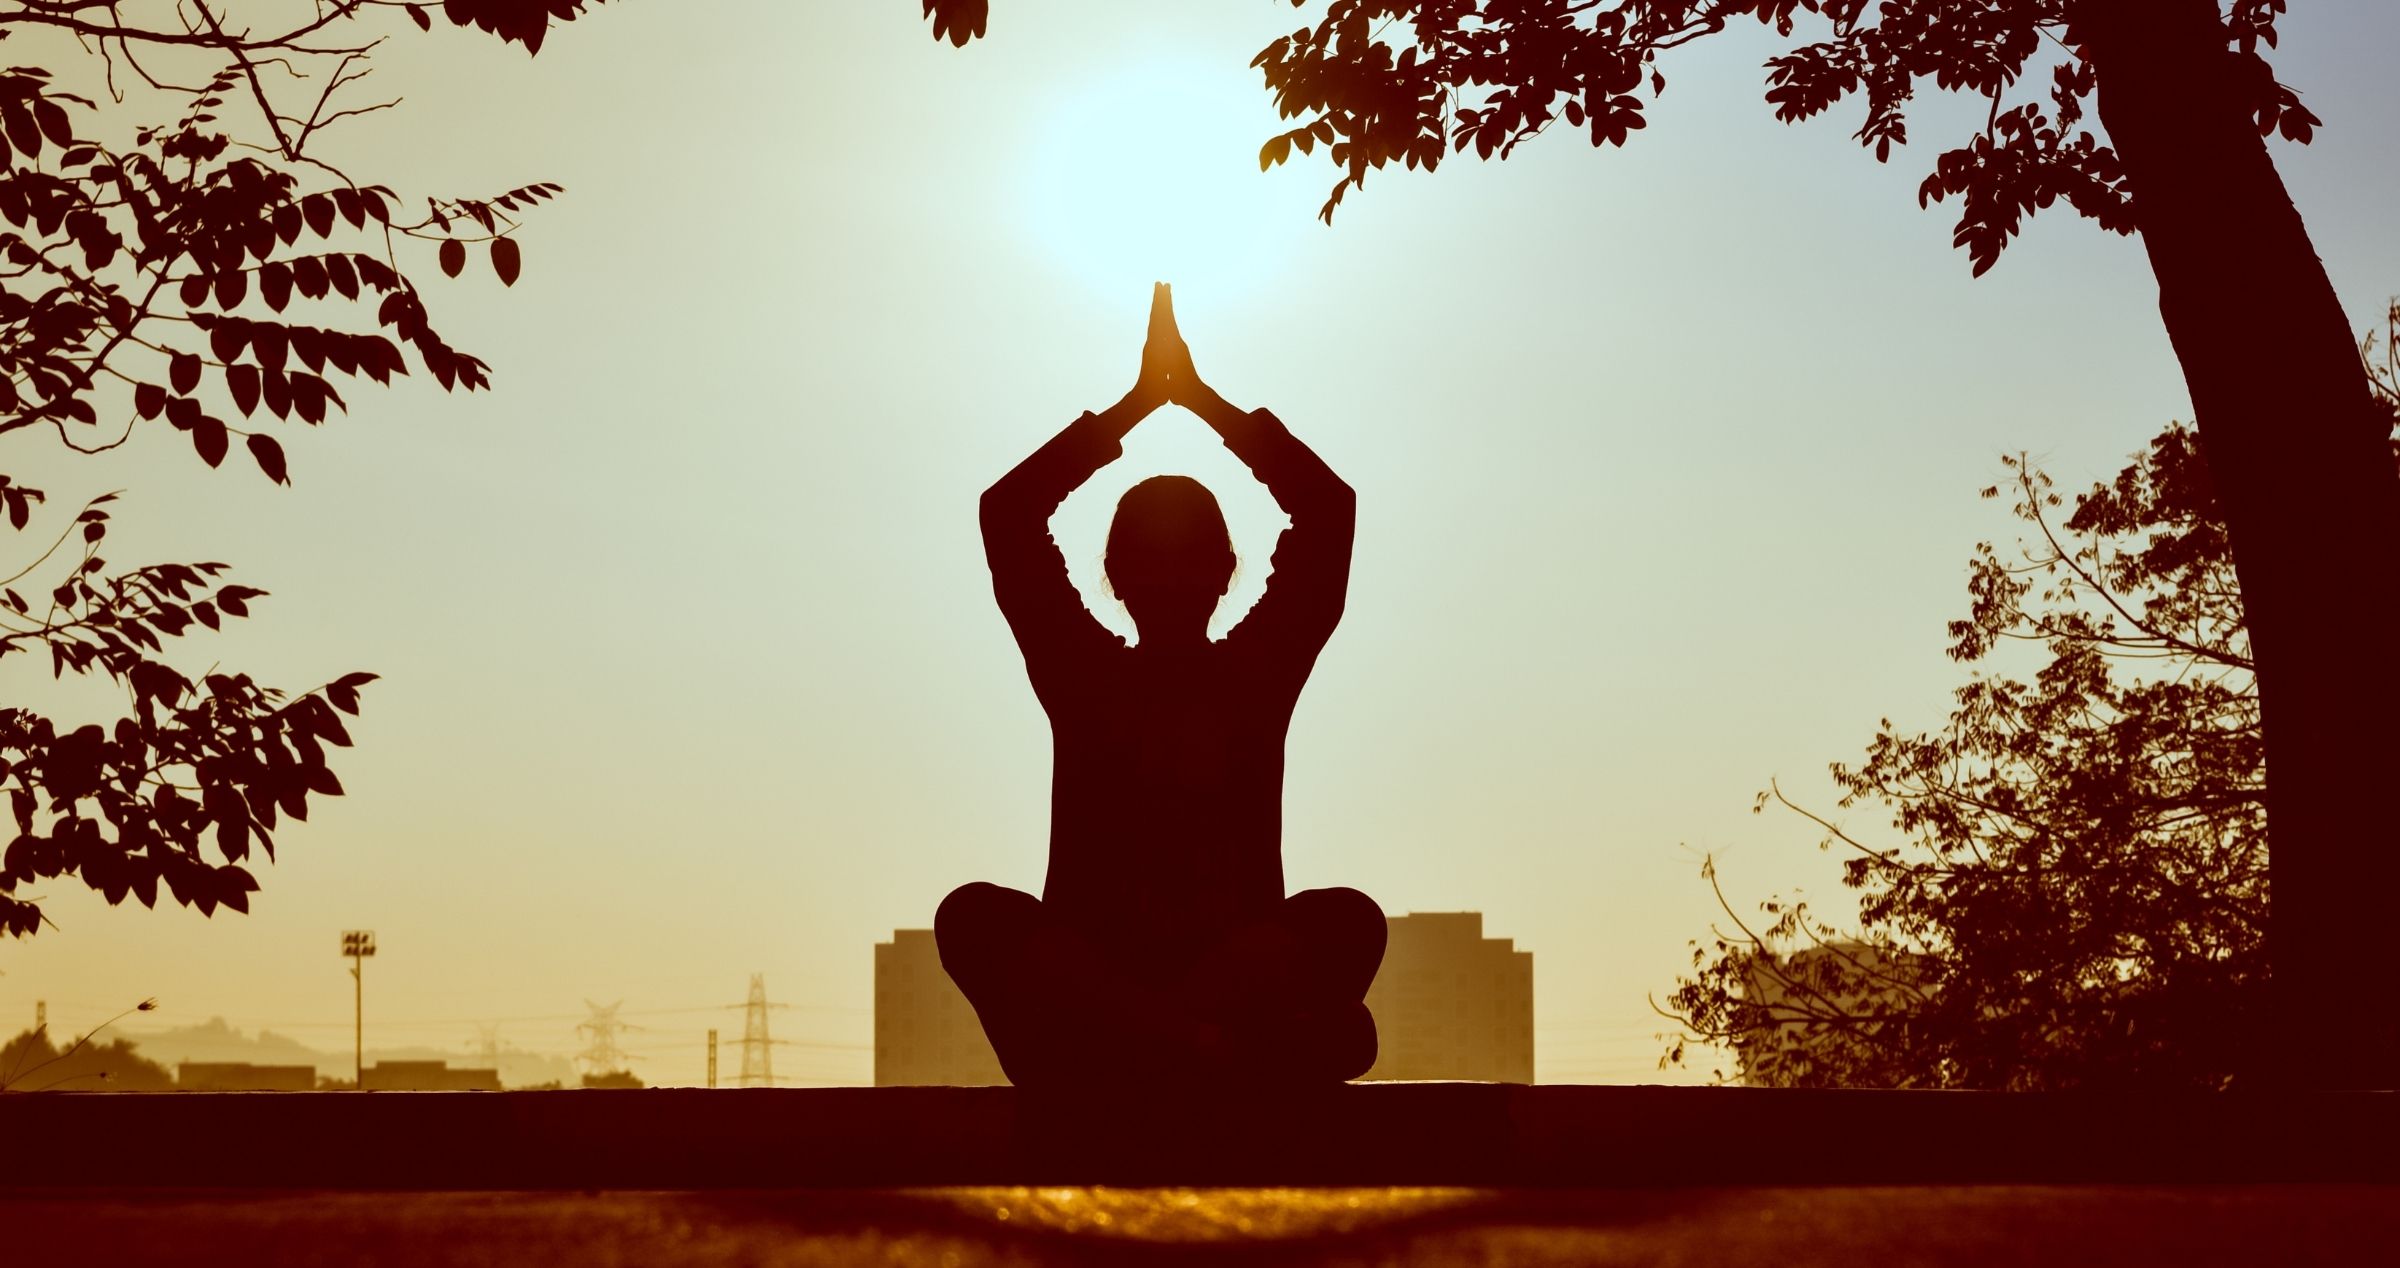 Silhouette of person in salute the sun yoga pose at sunrise